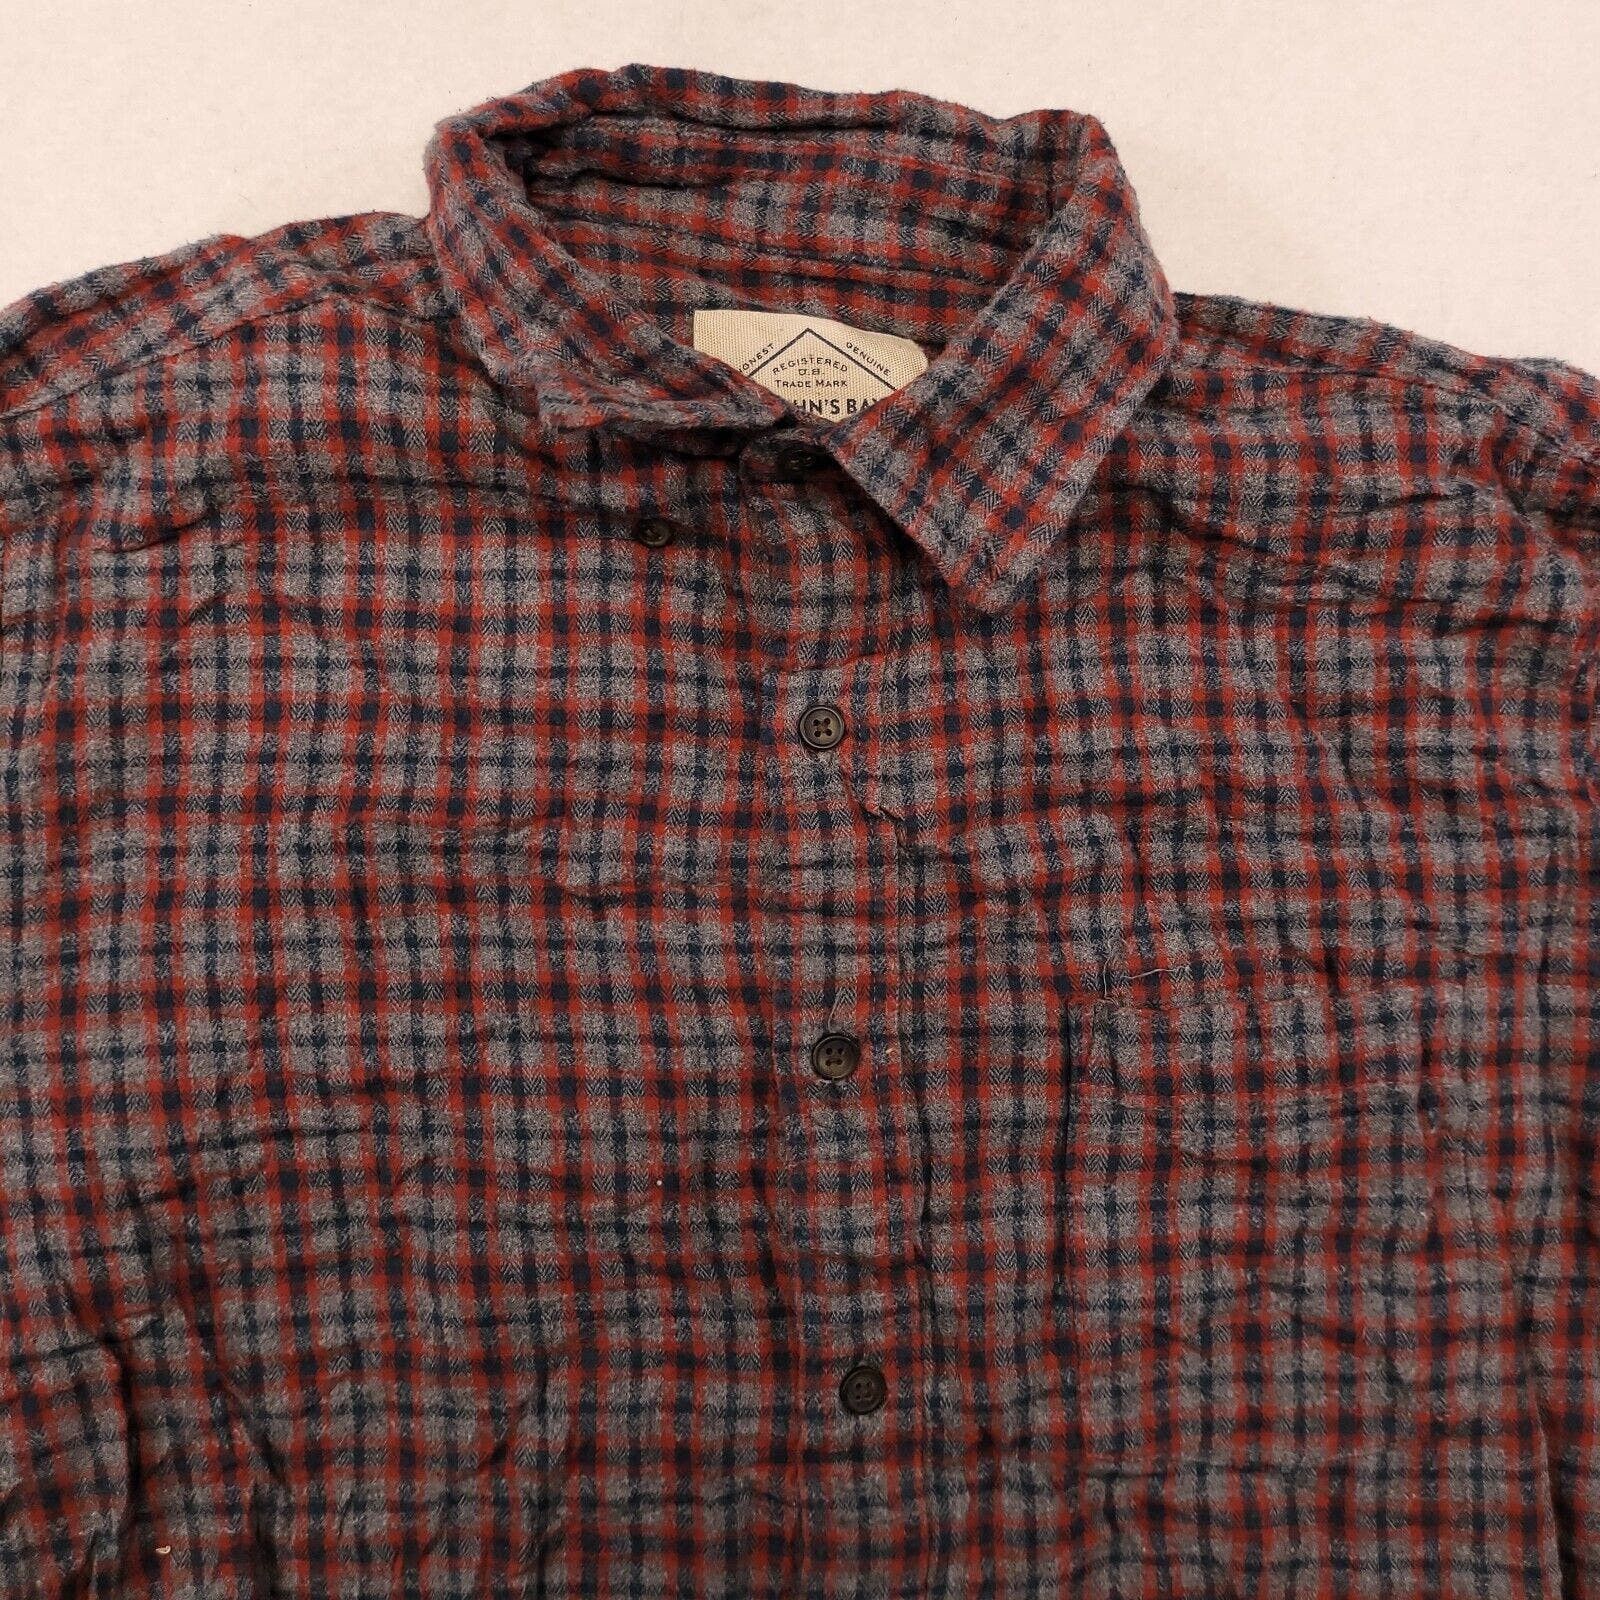 Men's St. Johns Bay Shirts (Button Ups)